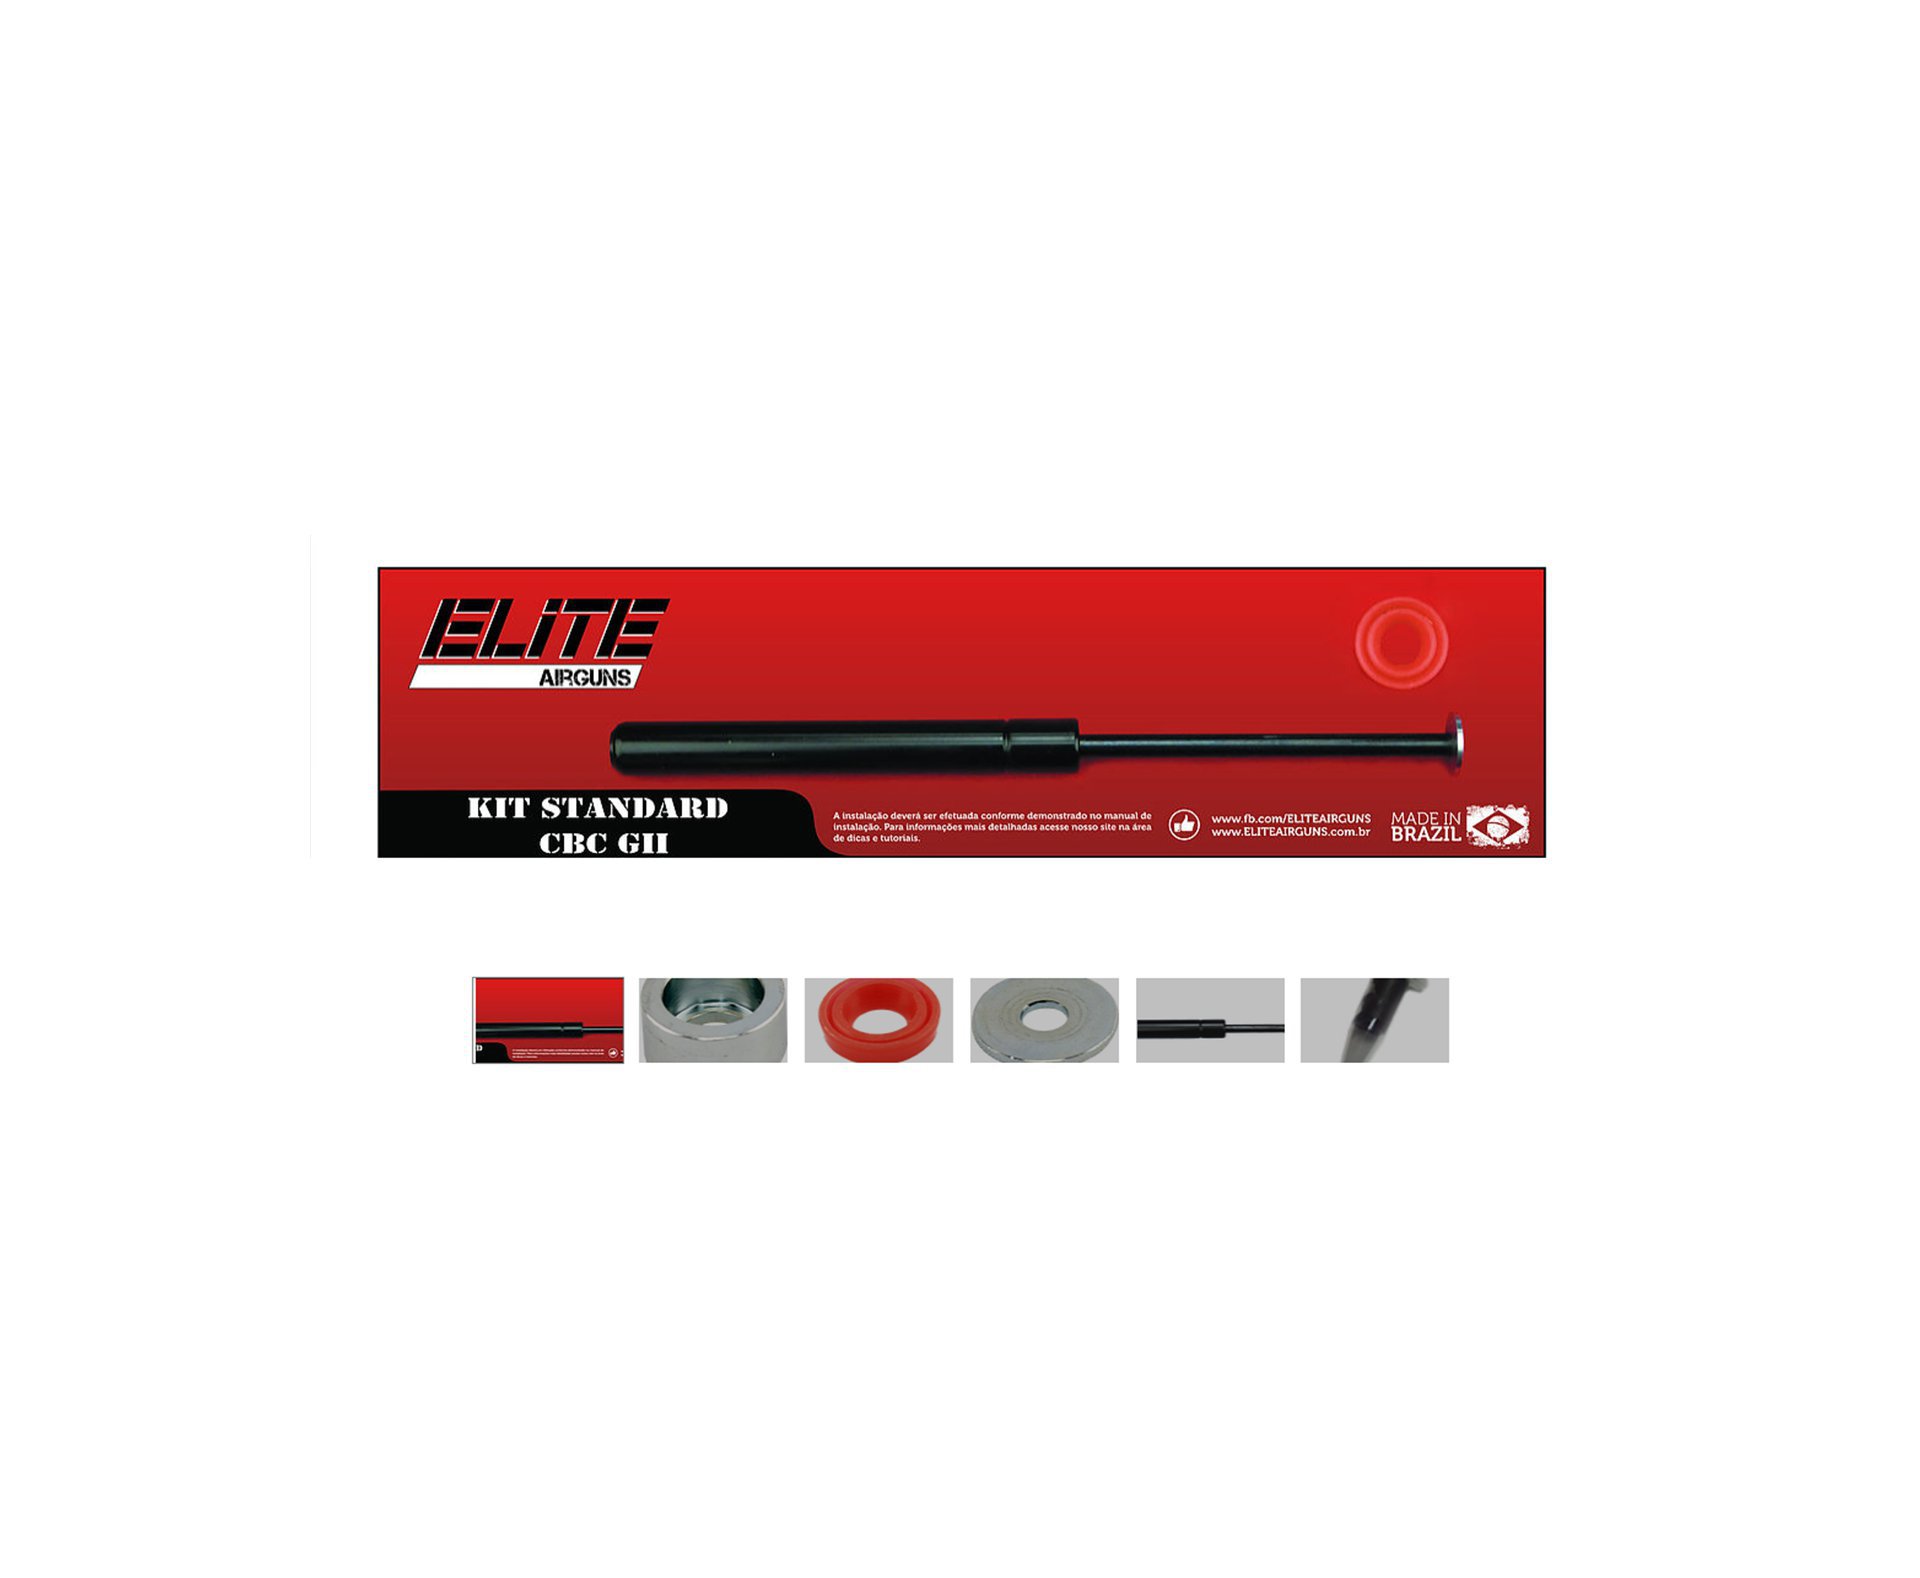 Kit Customização Standard Cbc Gii - 50kg - Elite Airguns